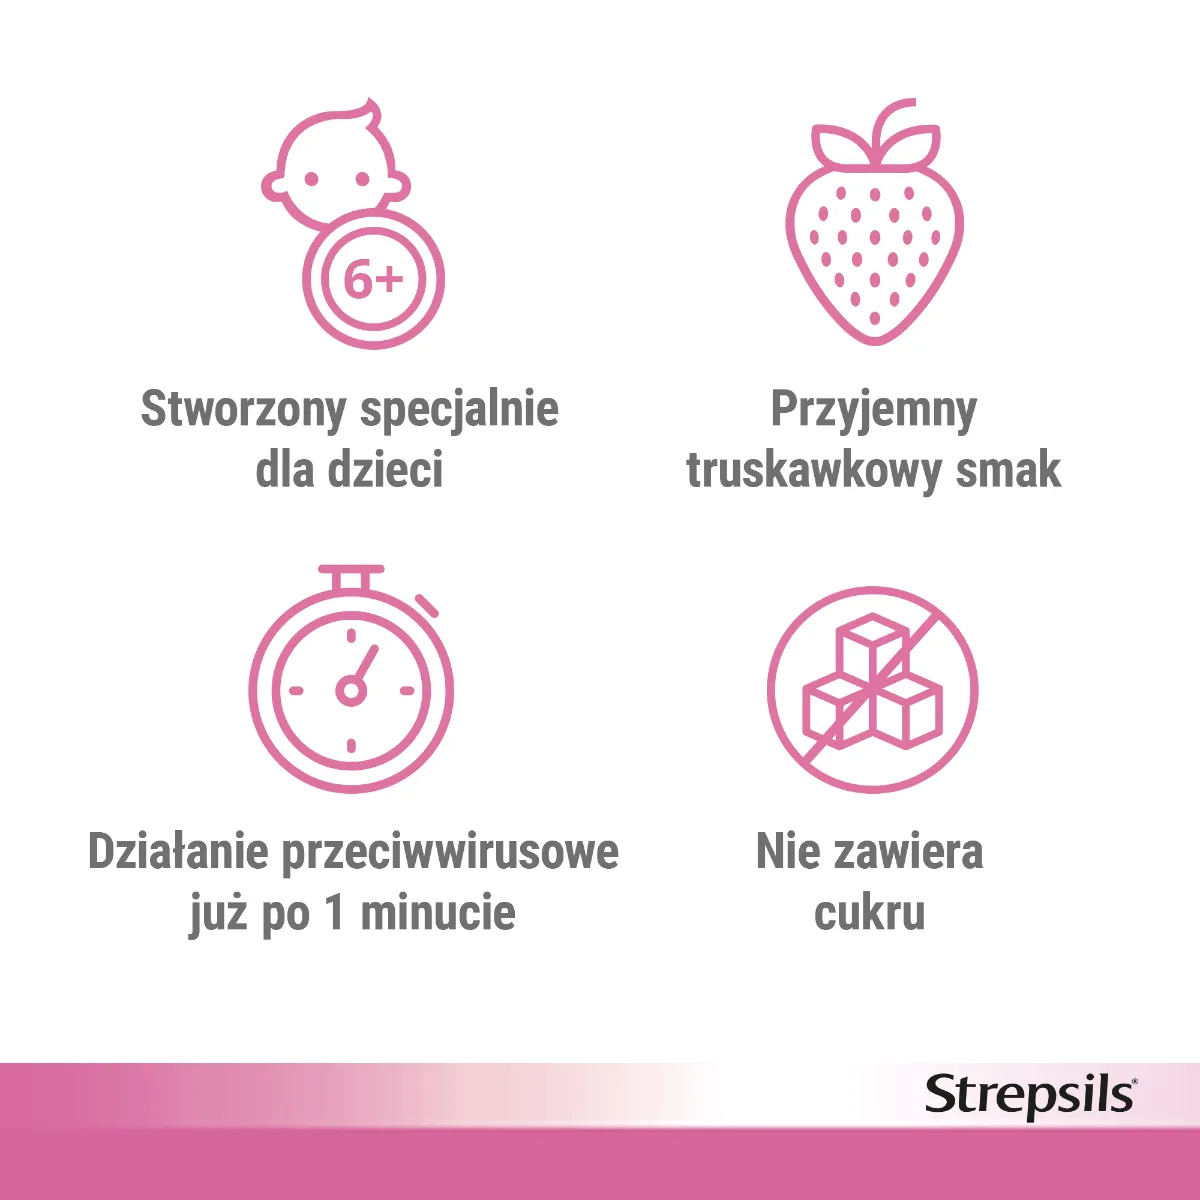 Strepsils Junior 1,2 mg + 0,6 mg - 24 pastylki twarde(do ssania) 